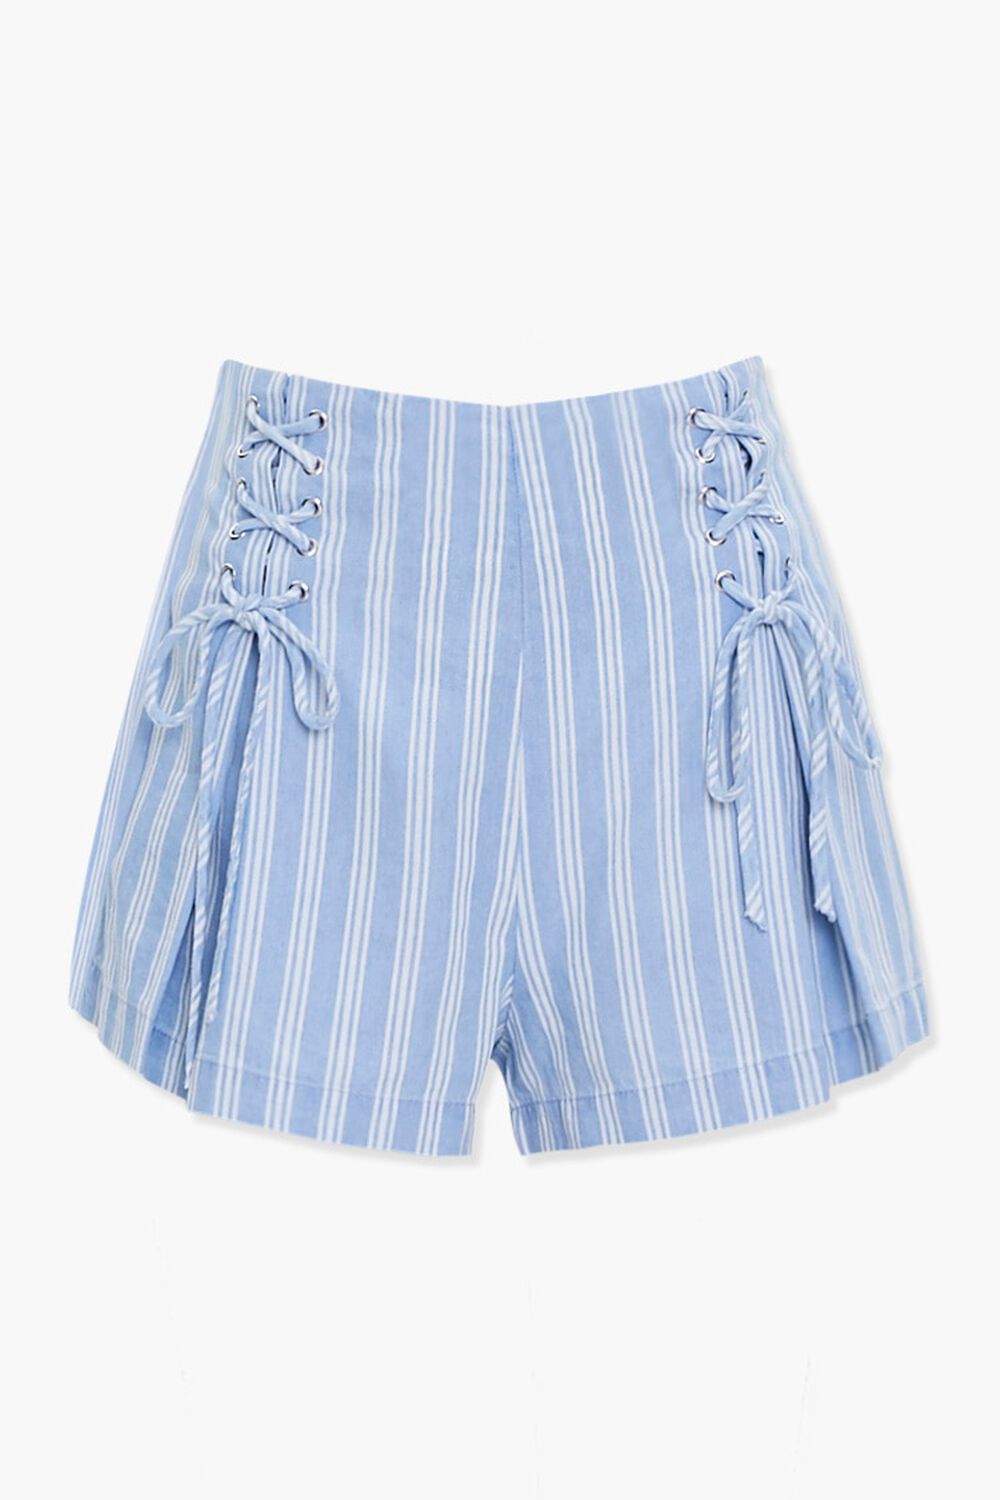 Striped Lace-Up Shorts, image 1